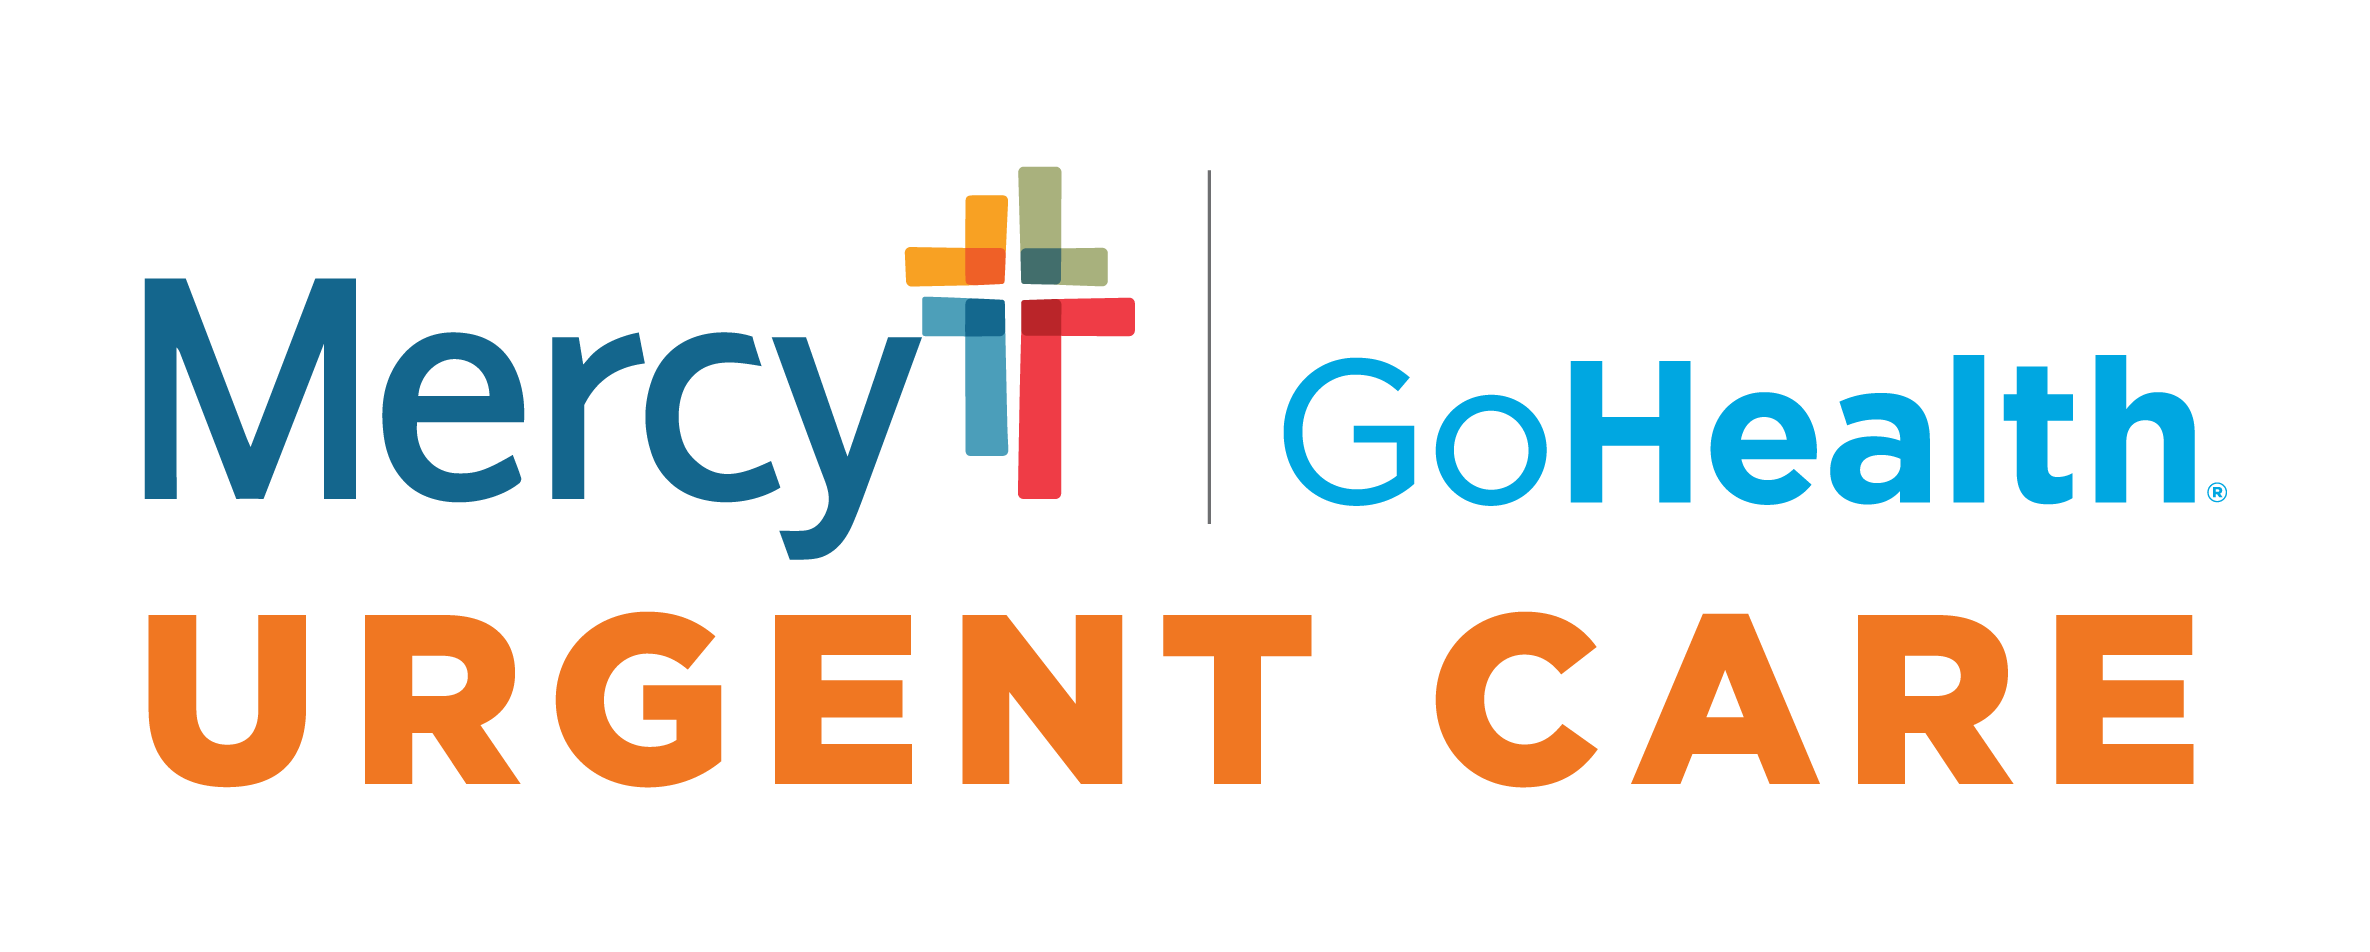 Mercy- Gohealth Urgent Care - Rogers Ave Logo